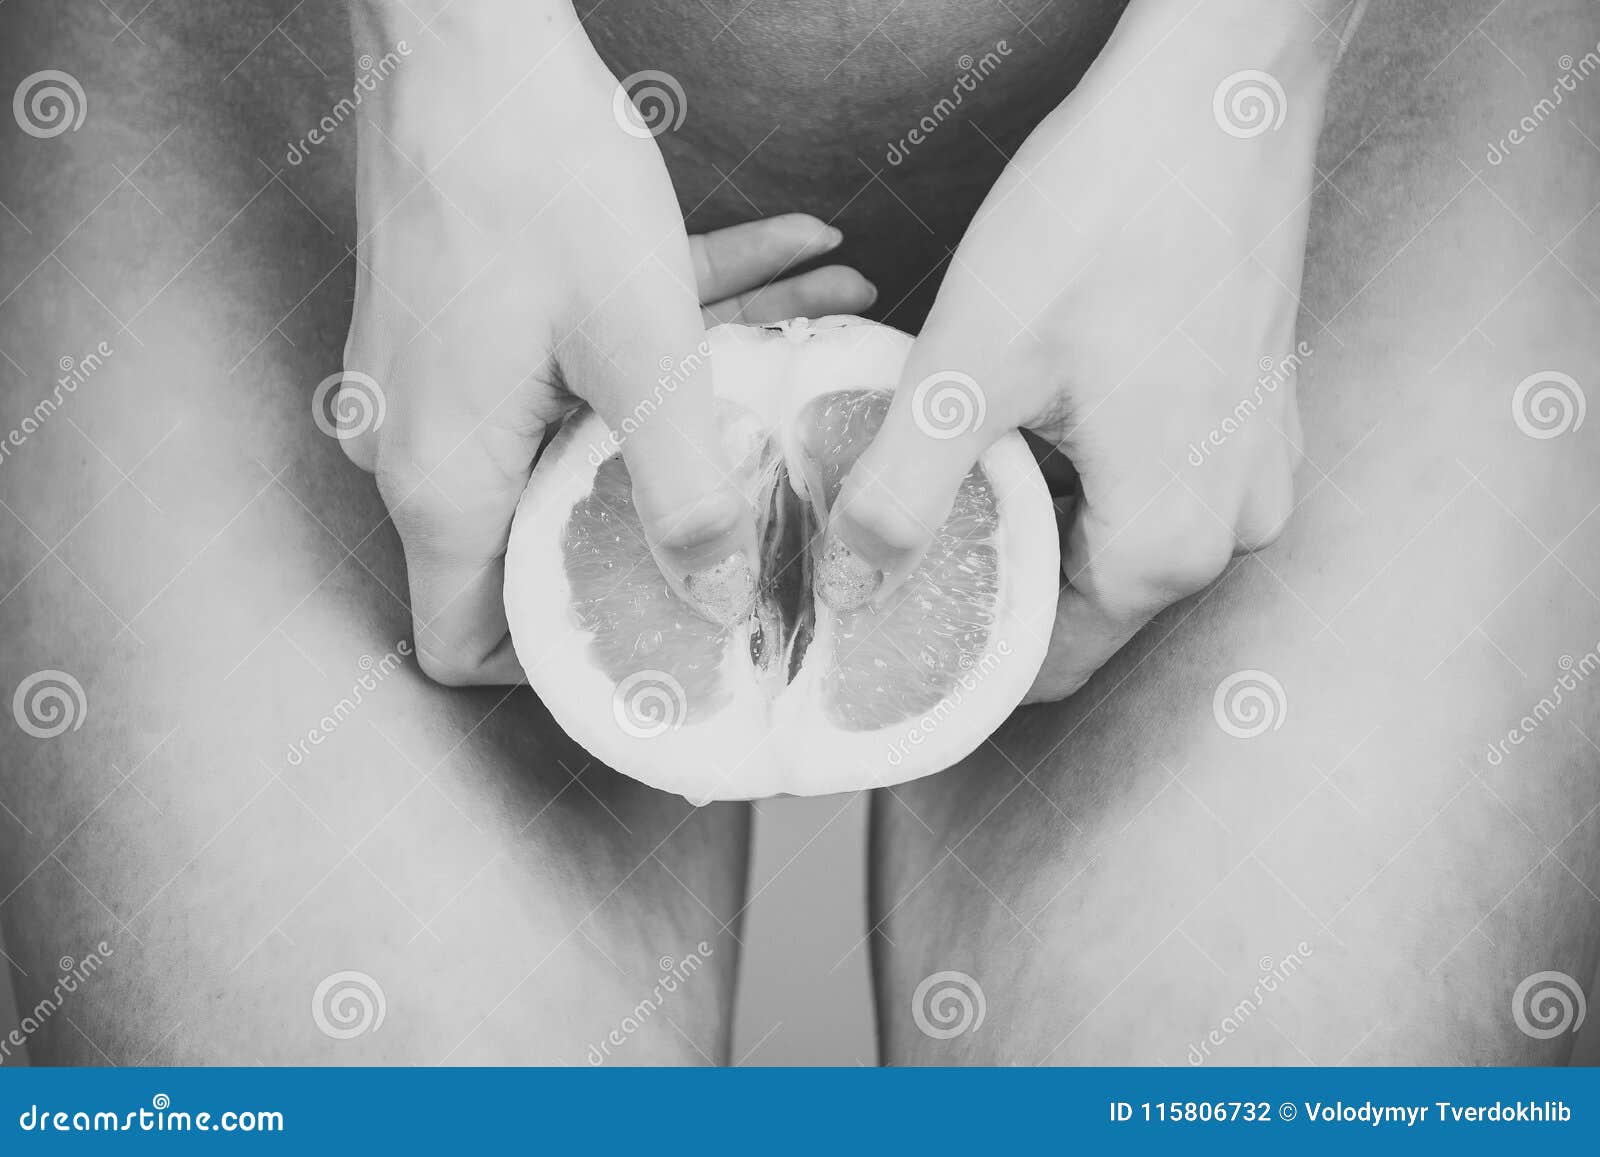 Девушка мастурбирует клитор руками фото